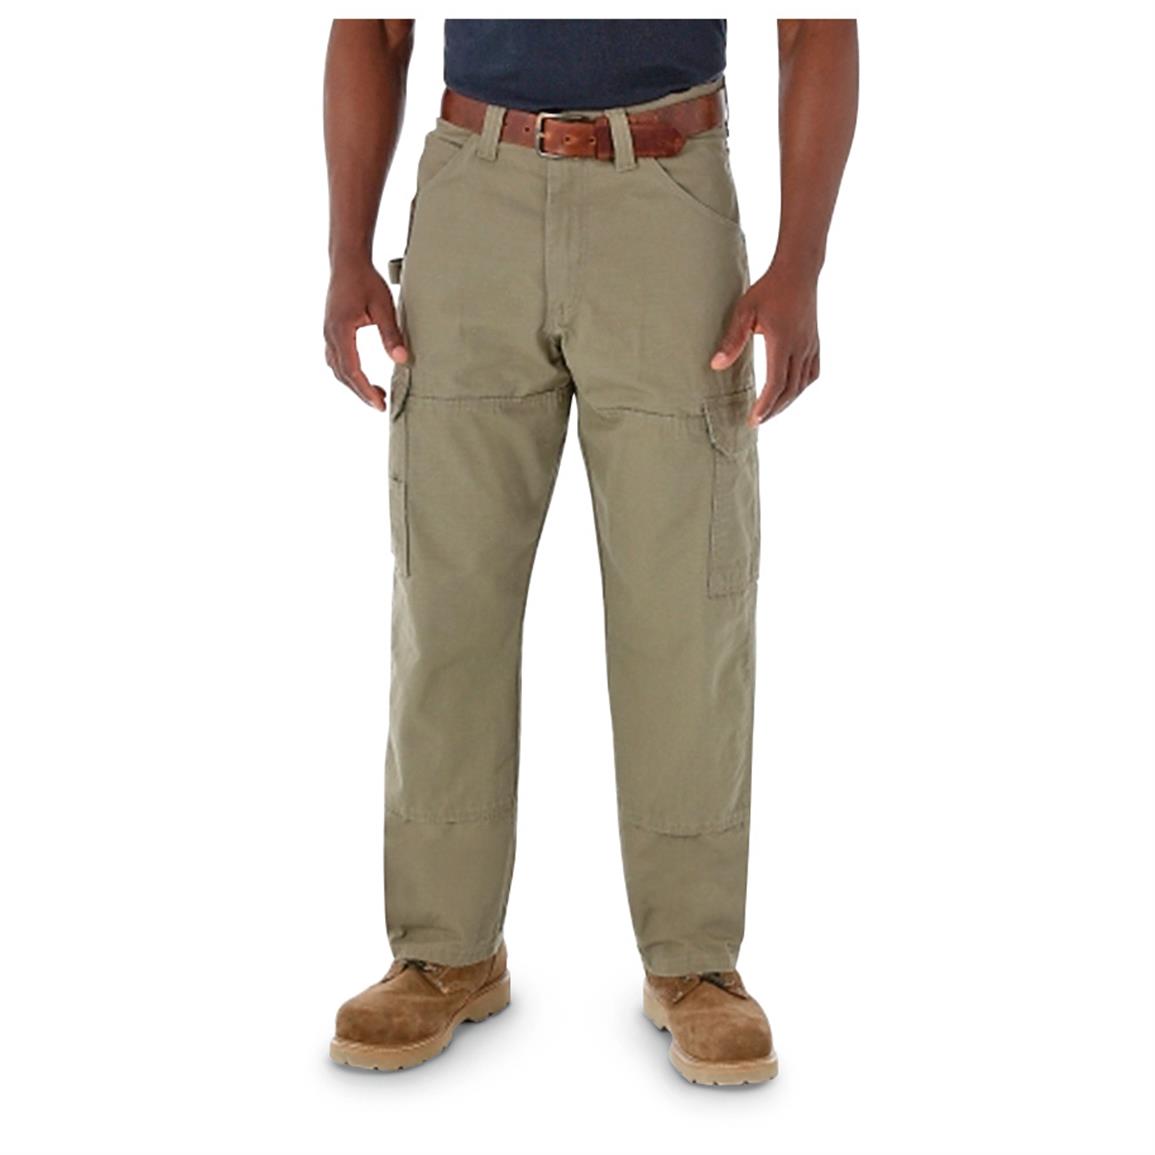 Men's paintball pants,MULTICAM BDU pants,ripstop cargo